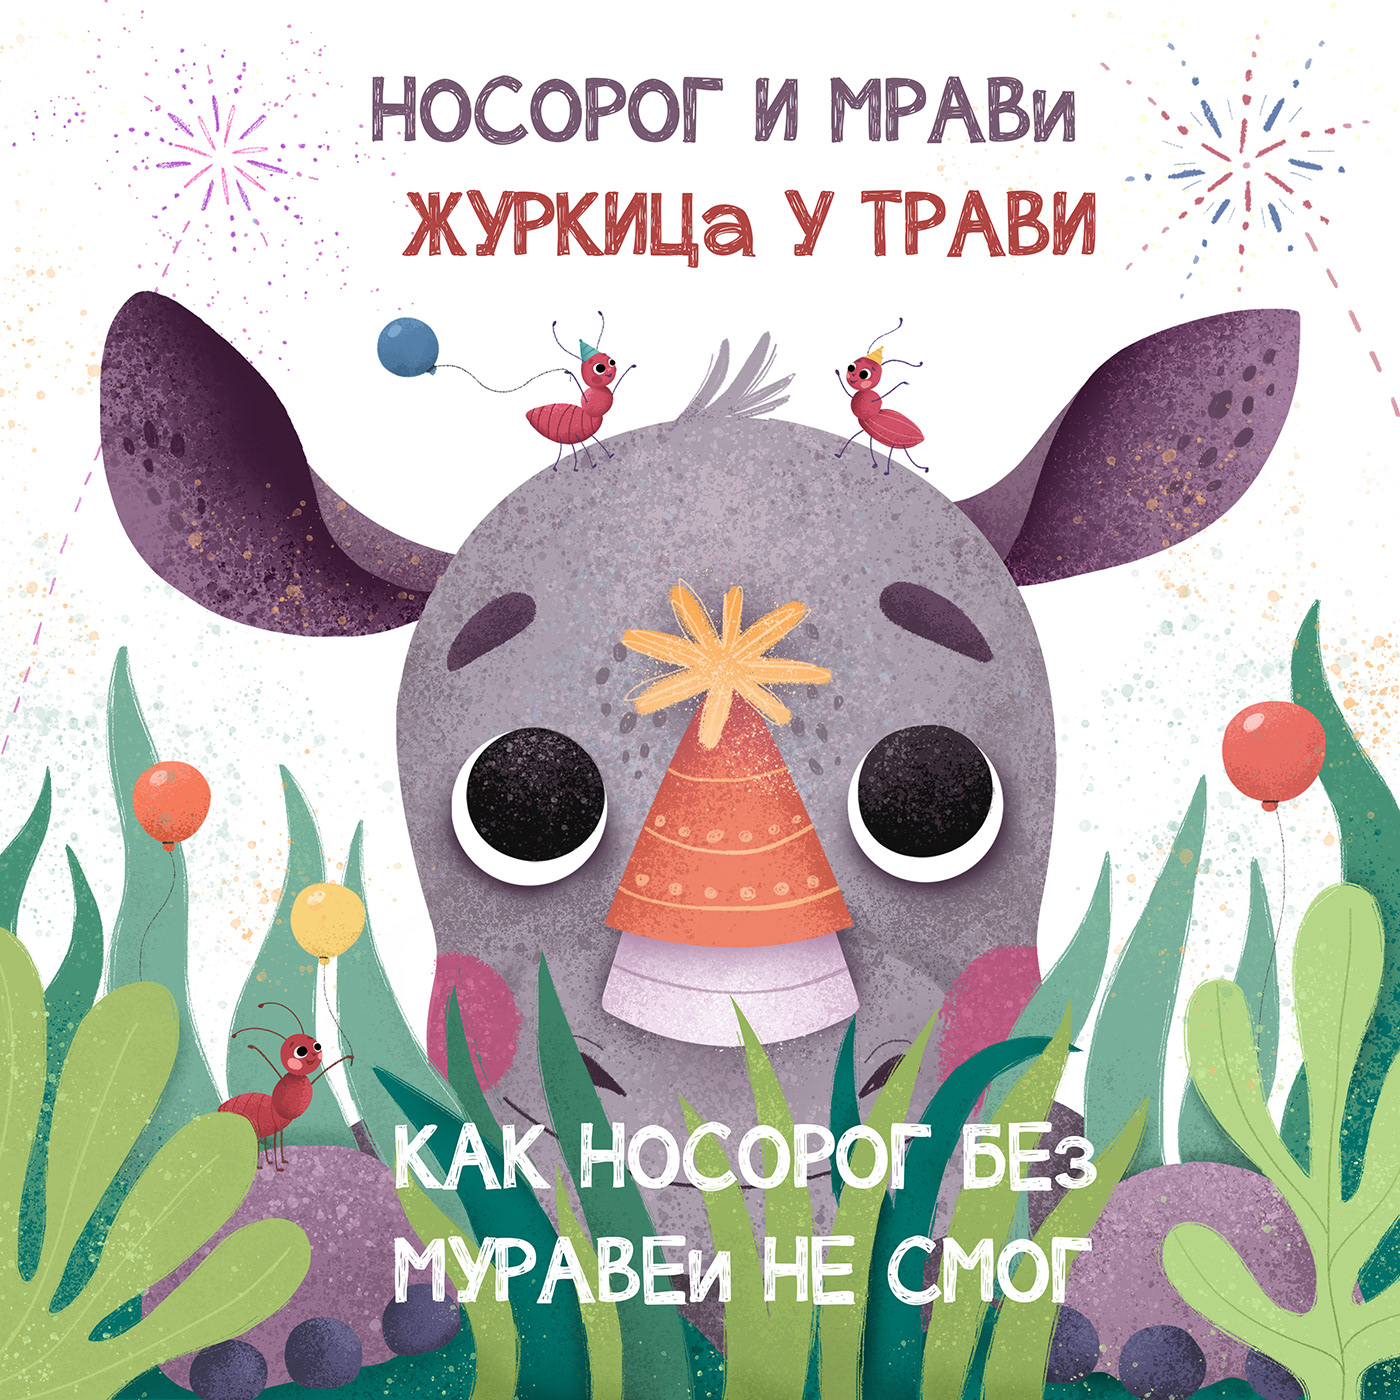 Child art children's book children illustration Picture book kids cute ILLUSTRATION  Birthday party Rhino